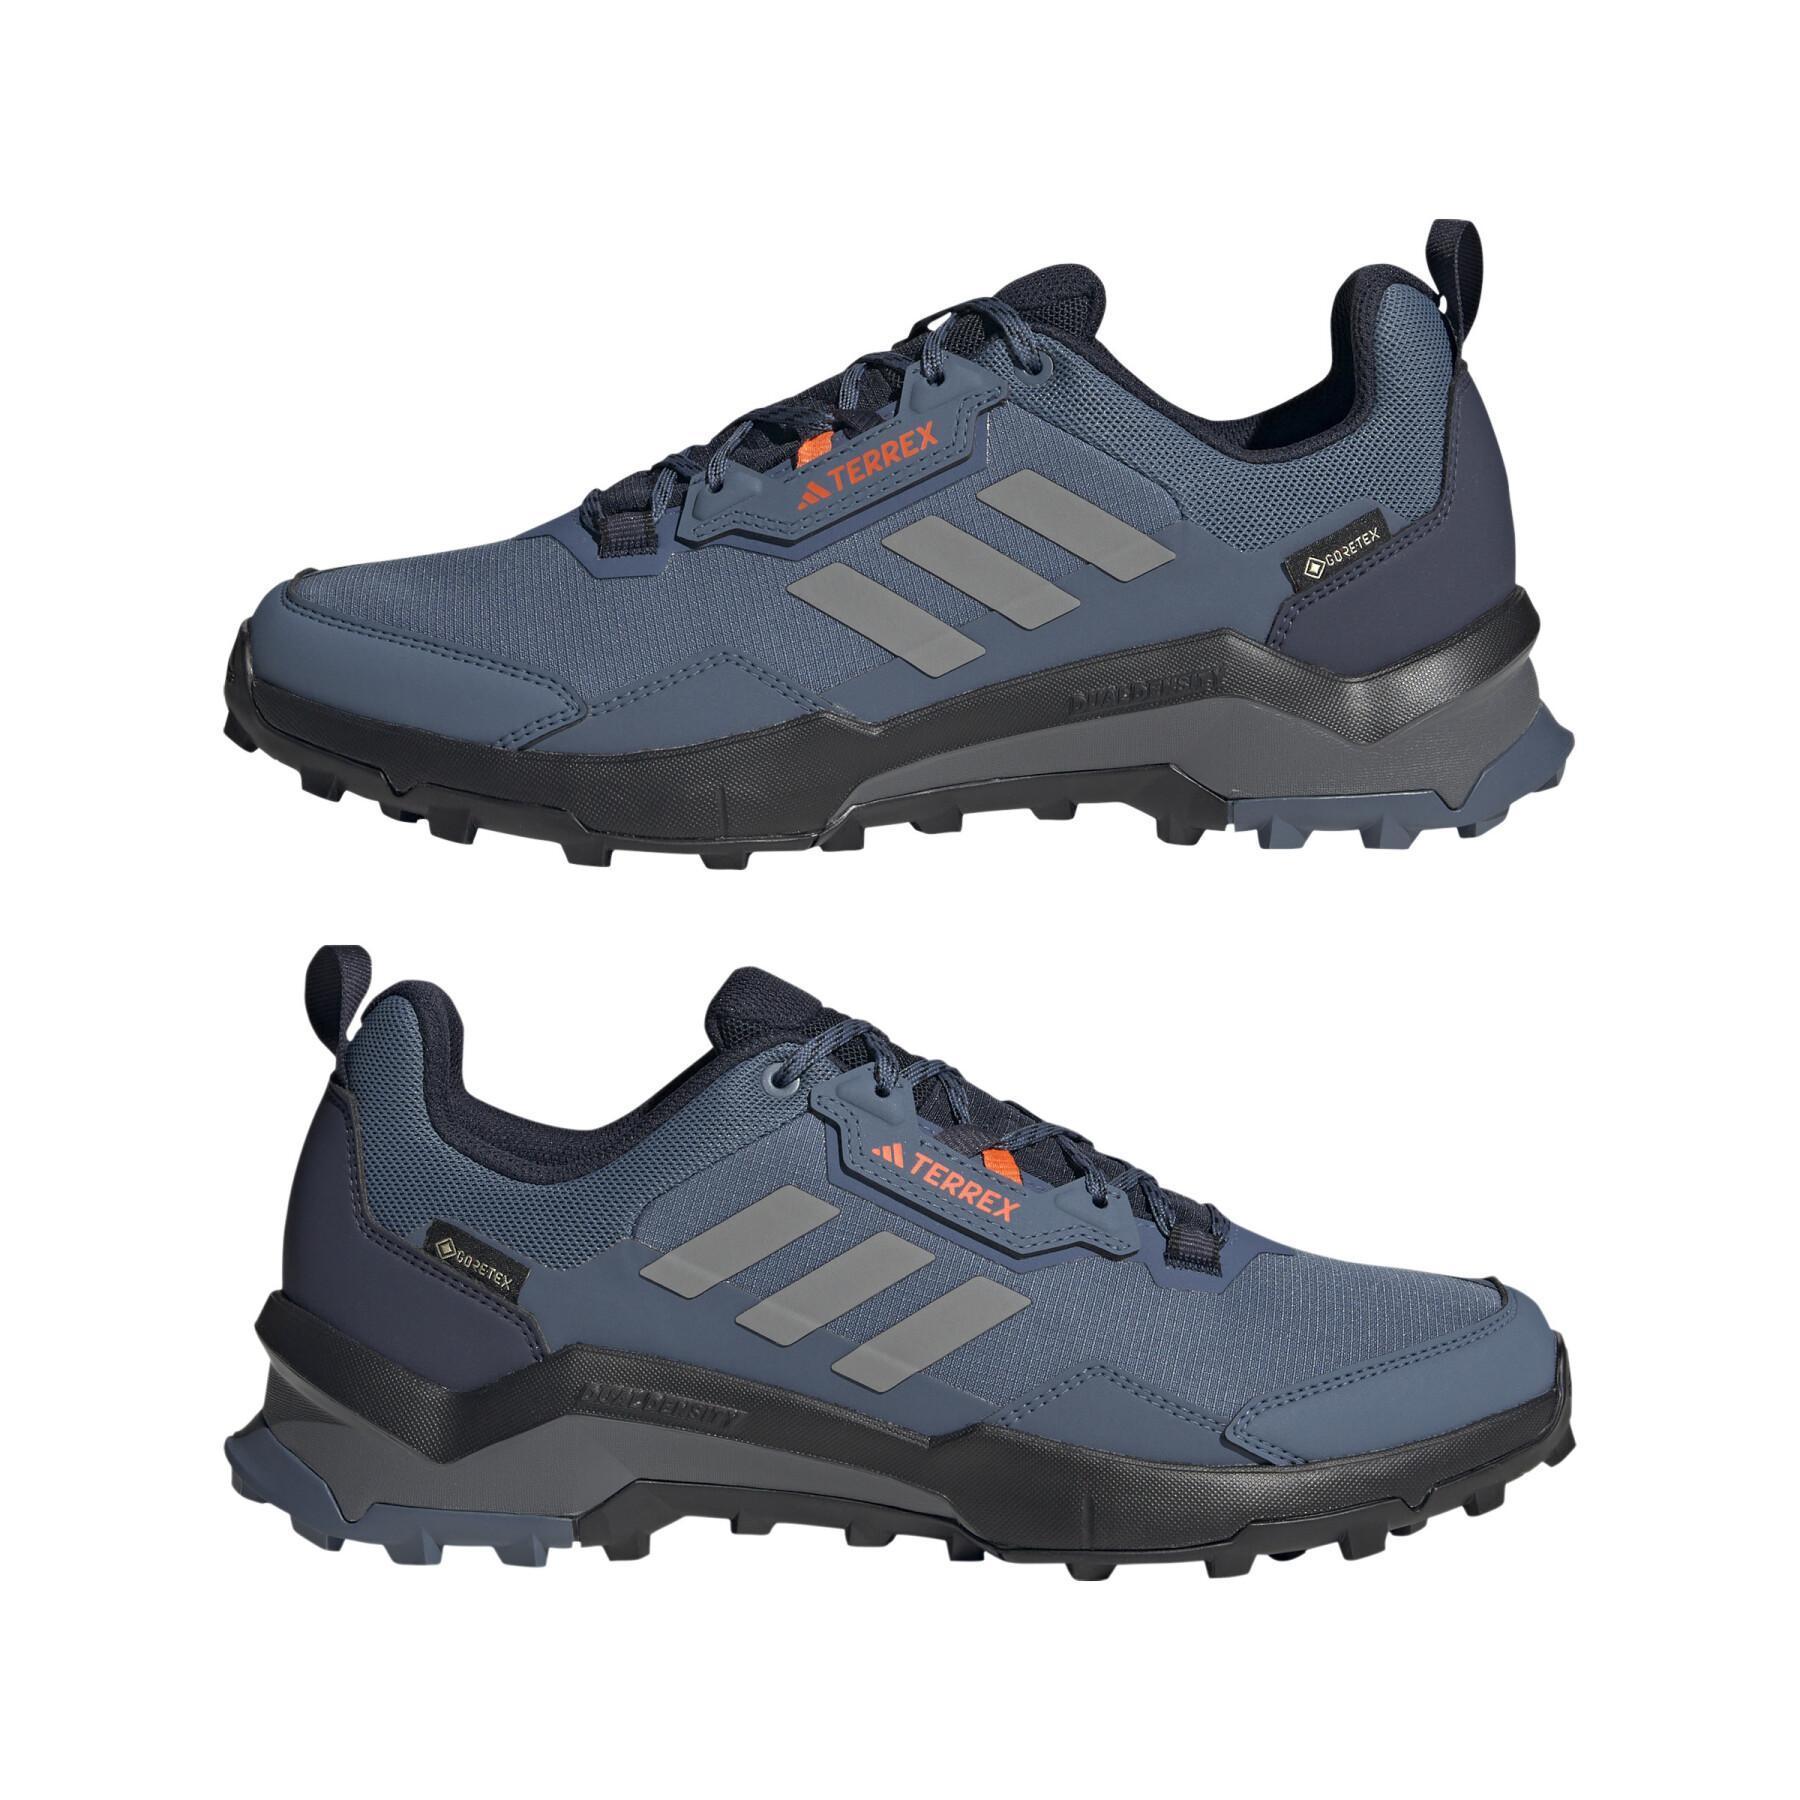 Sapatos para caminhadas adidas Terrex Ax4 Gtx